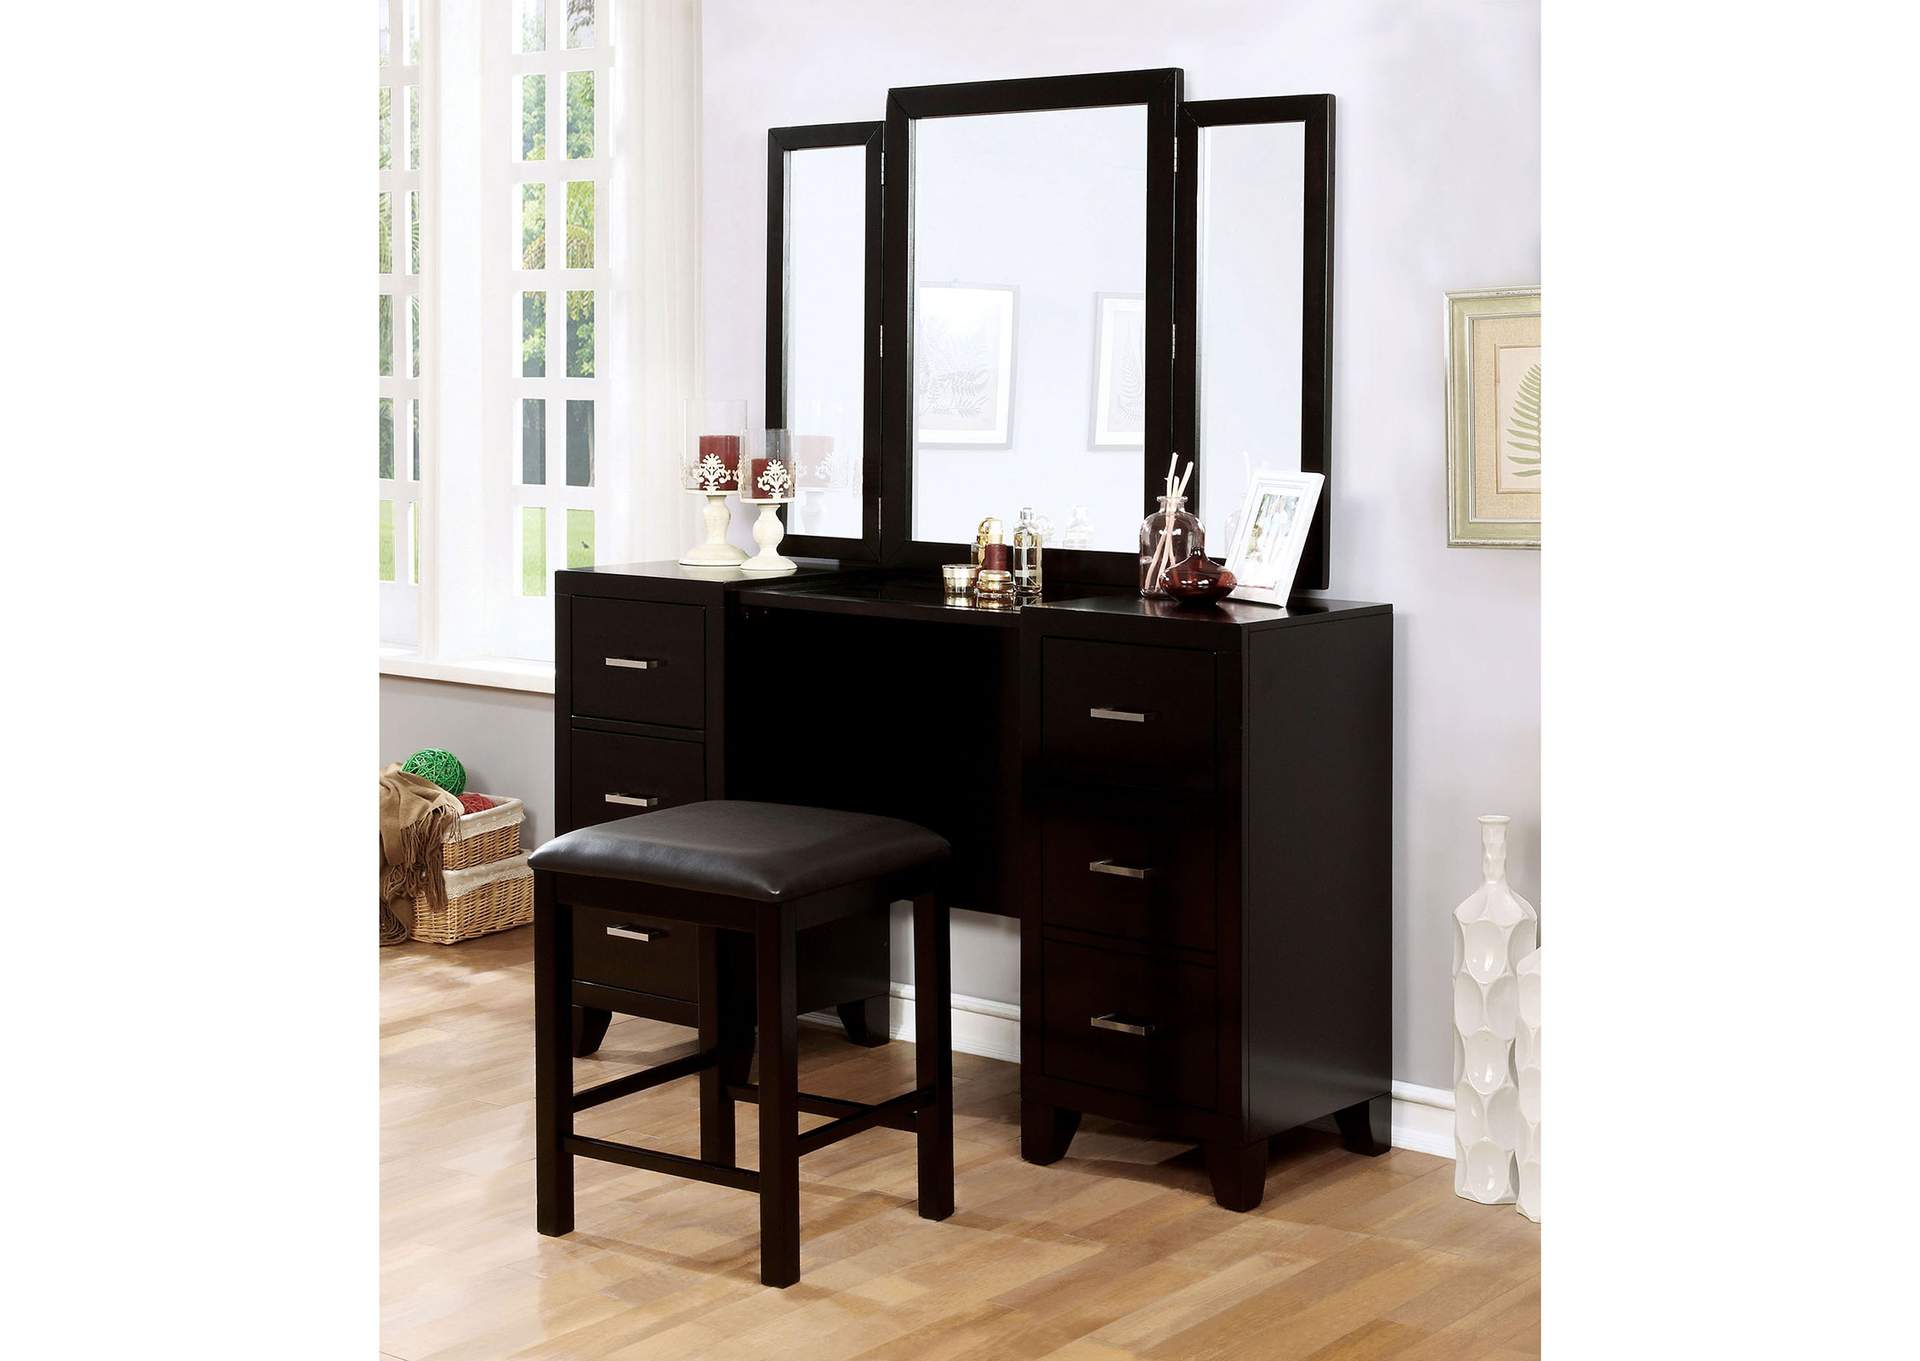 black vanity dresser